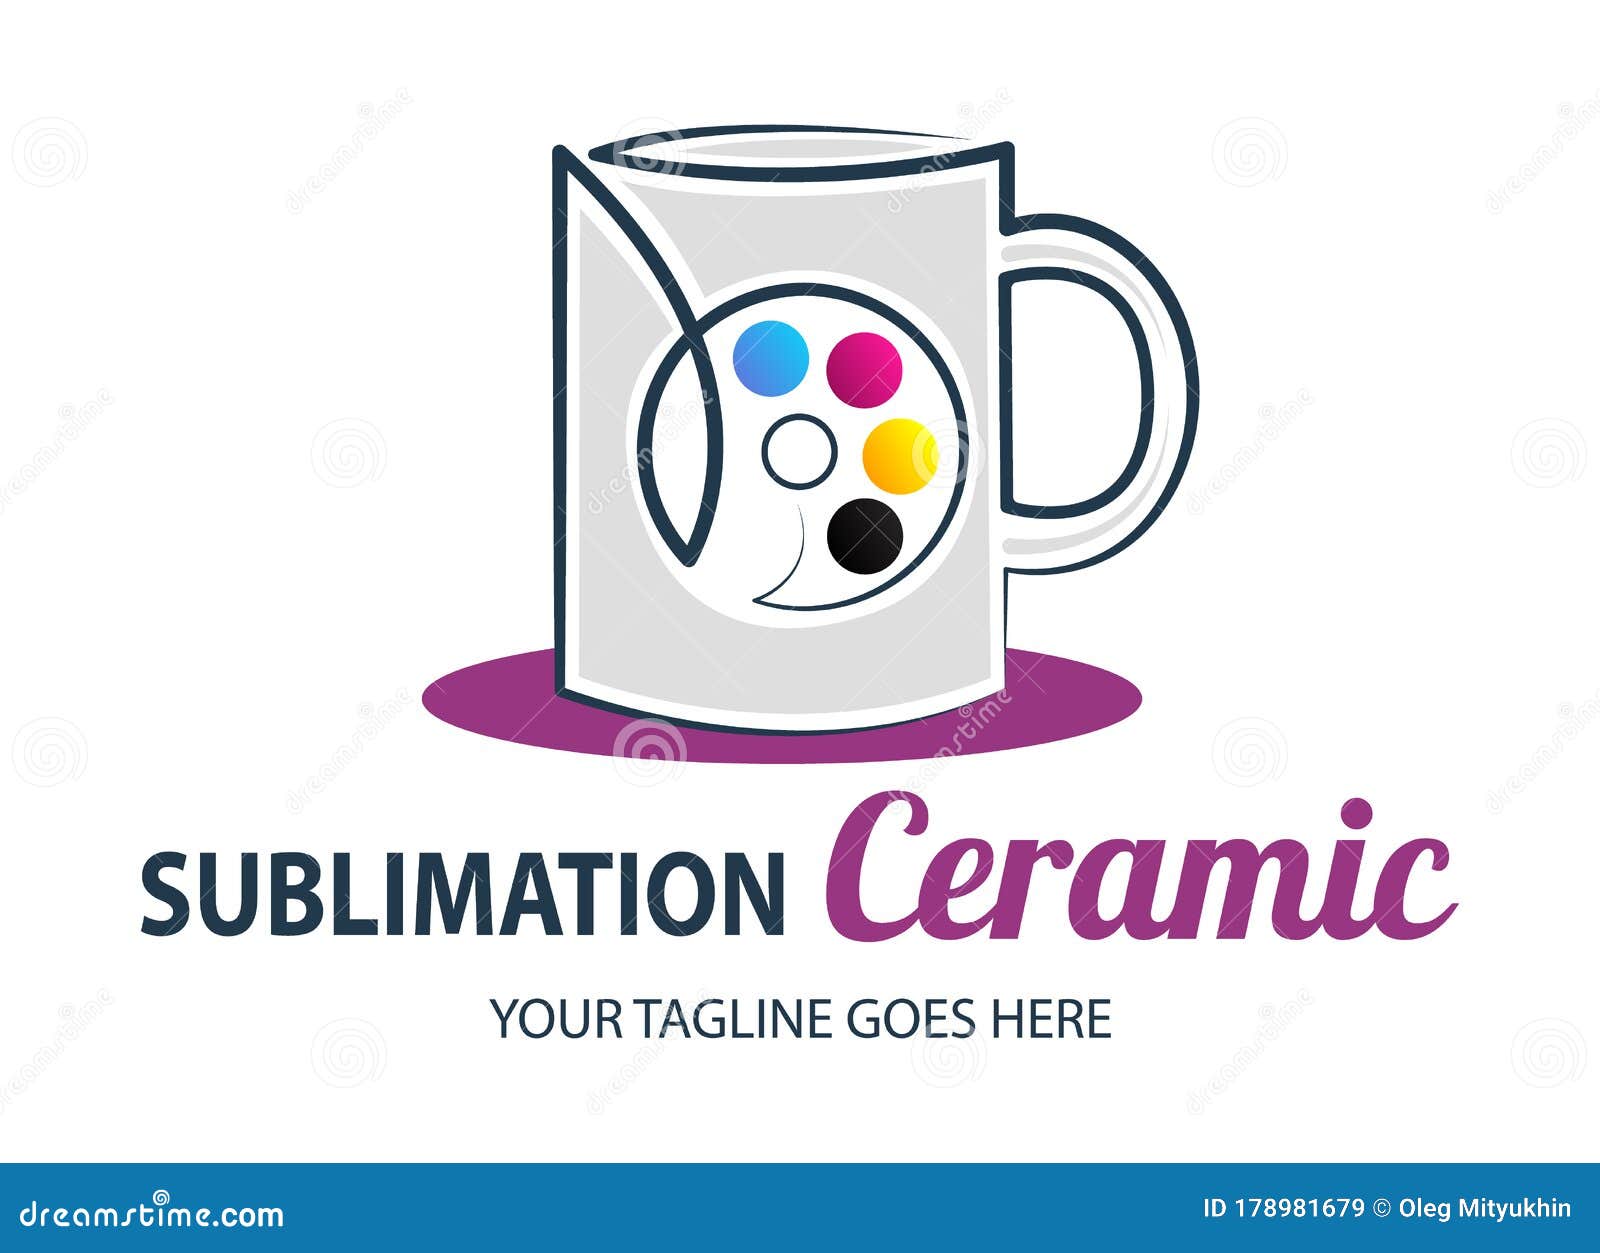 sublimation logo ideas 3